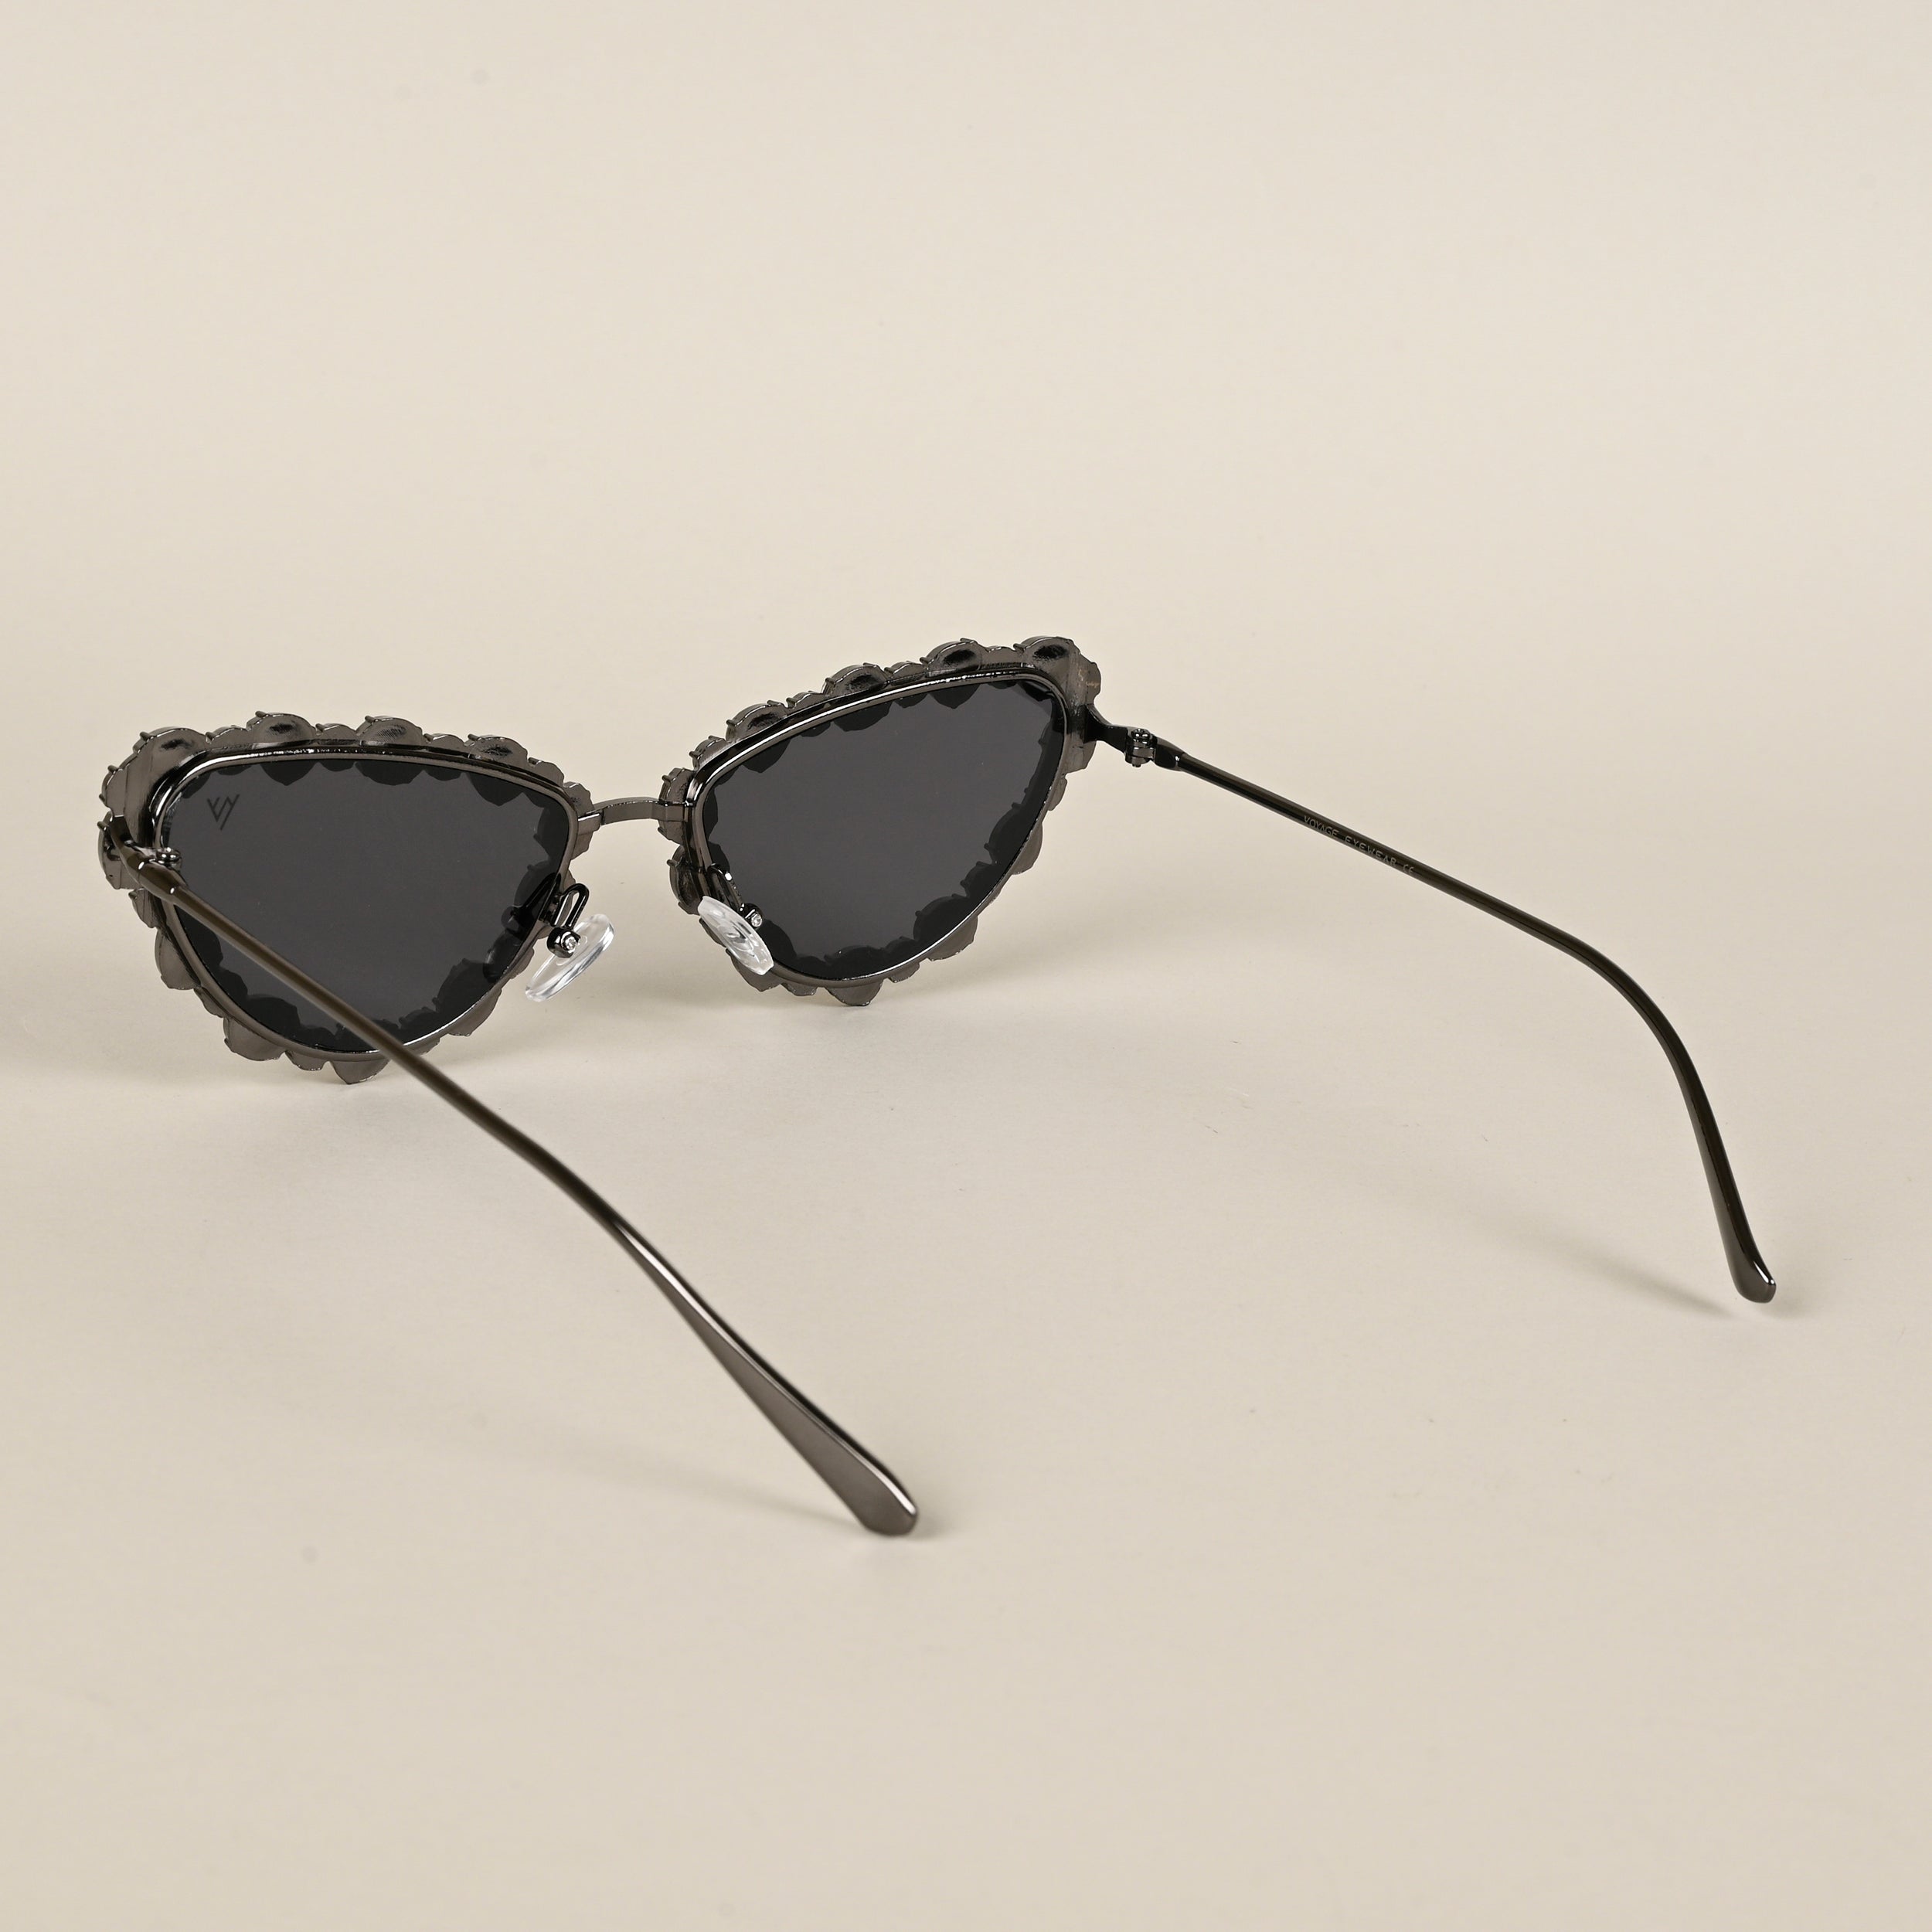 Voyage Black Cateye Sunglasses for Women (3562MG4127)